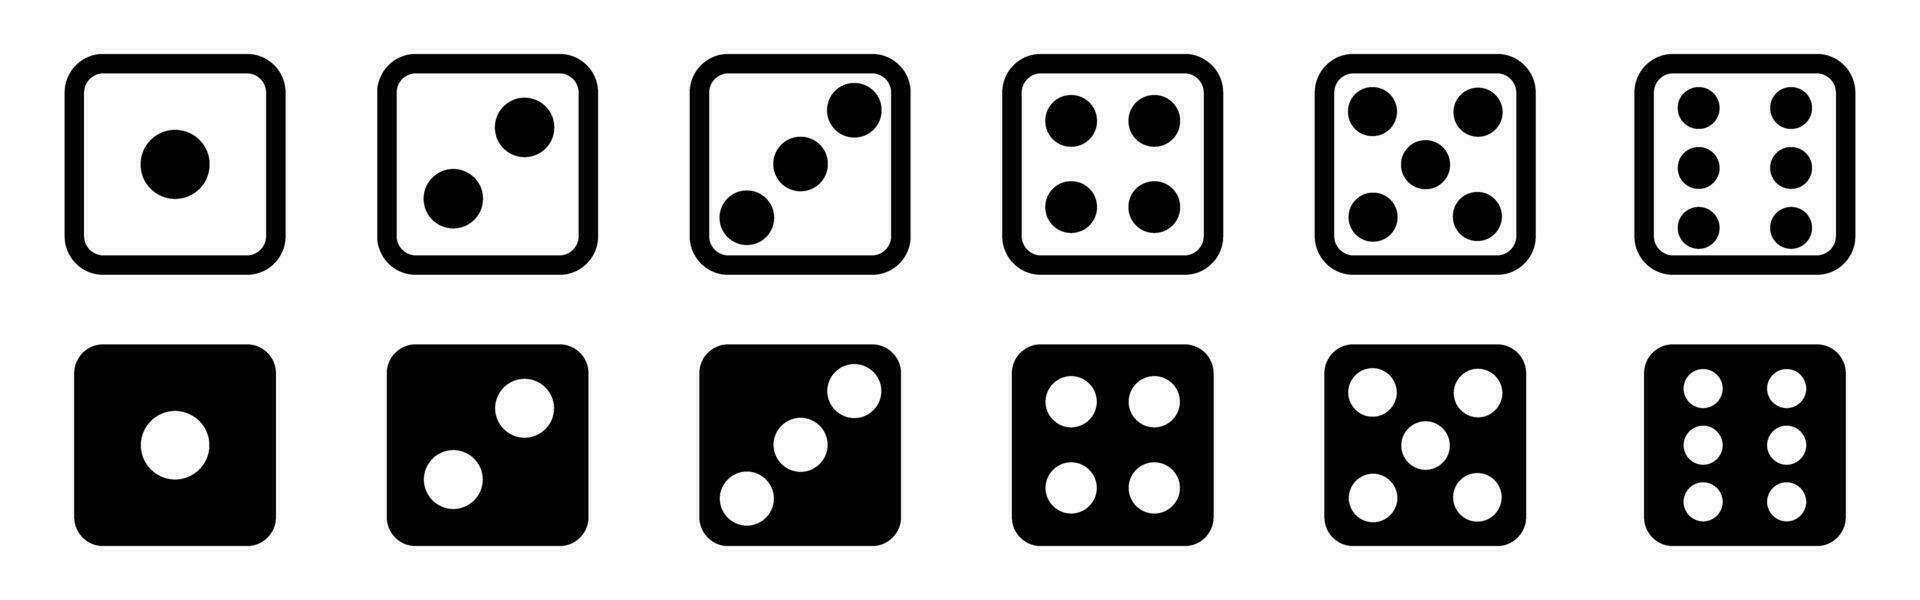 flat dice icon symbol gambling chance vector